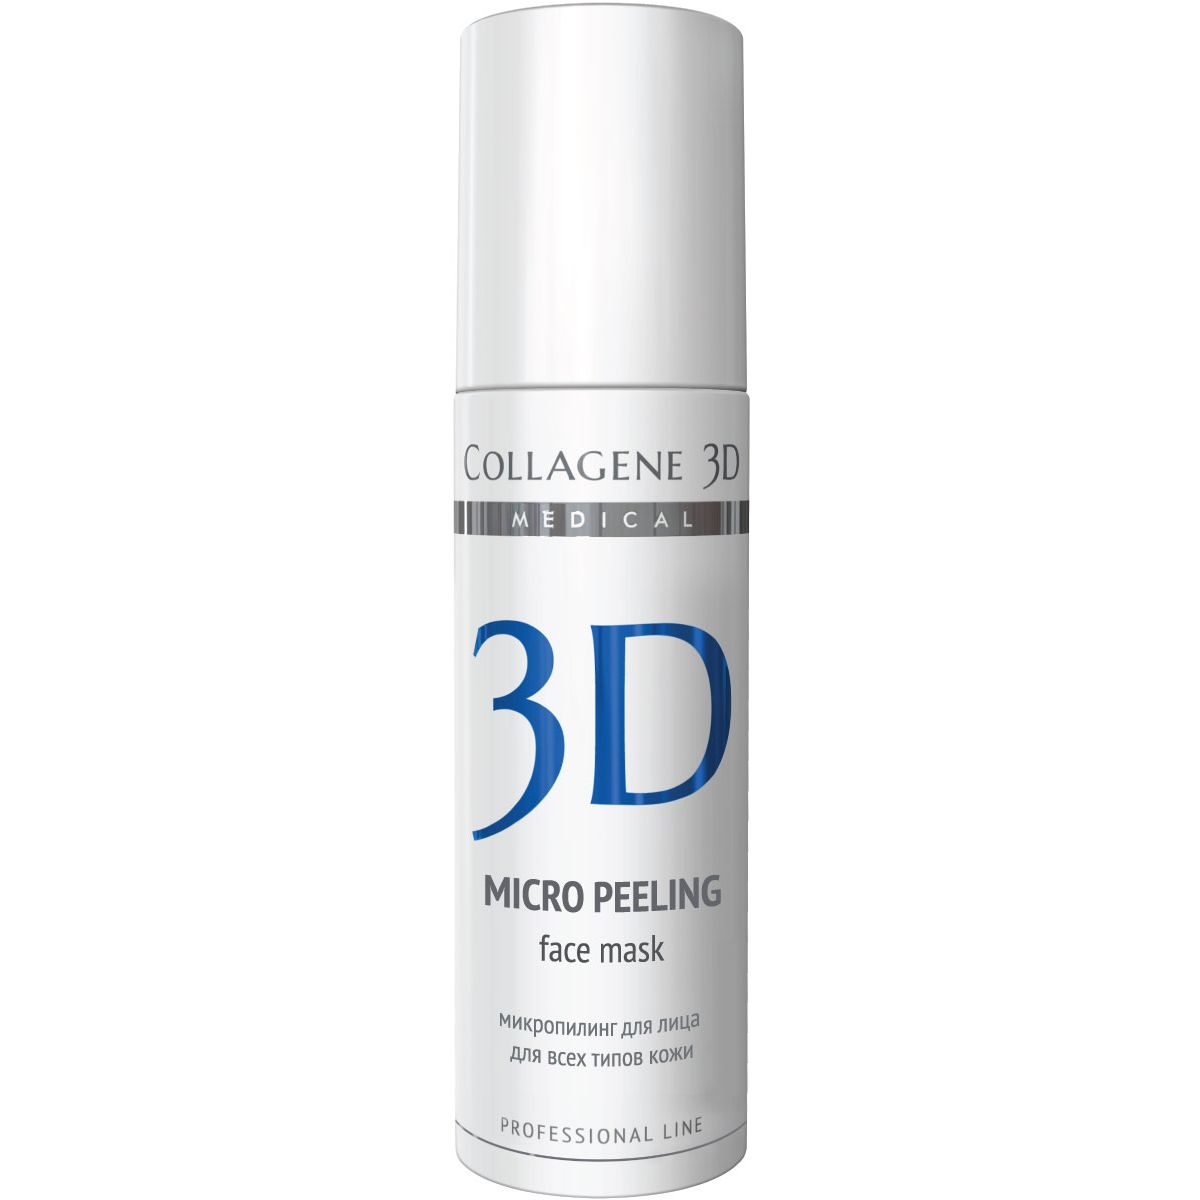 Пилинг для лица Medical Collagene 3D Micro Peeling Face Mask Professional 150мл londa professional 7 44 краска для волос блонд интенсивно медный lc new micro reds 60 мл